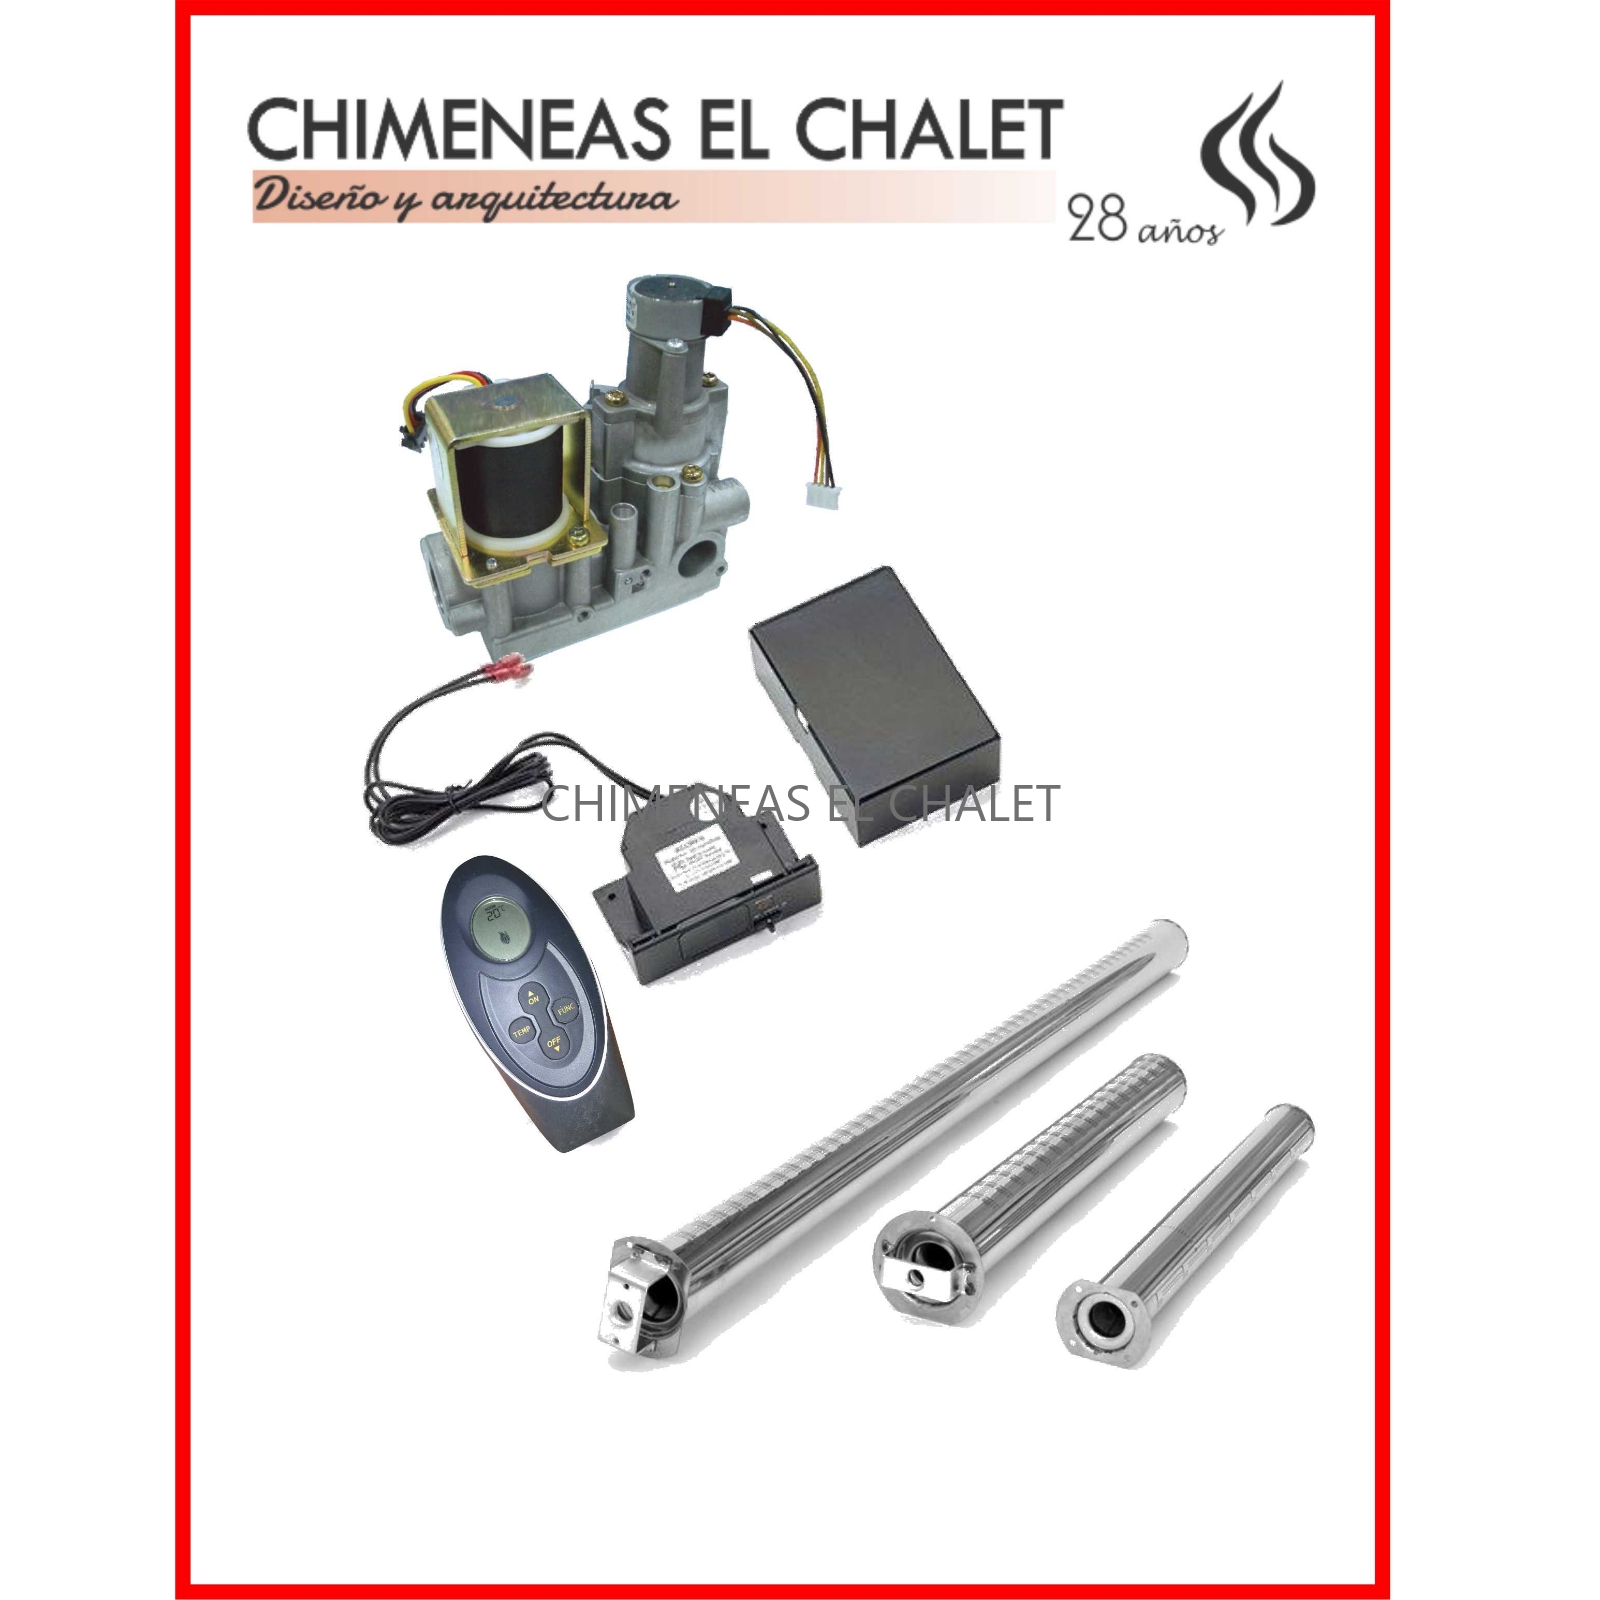 Herramientas de chimenea, accesorio de chimenea - China Steamer, Kettle